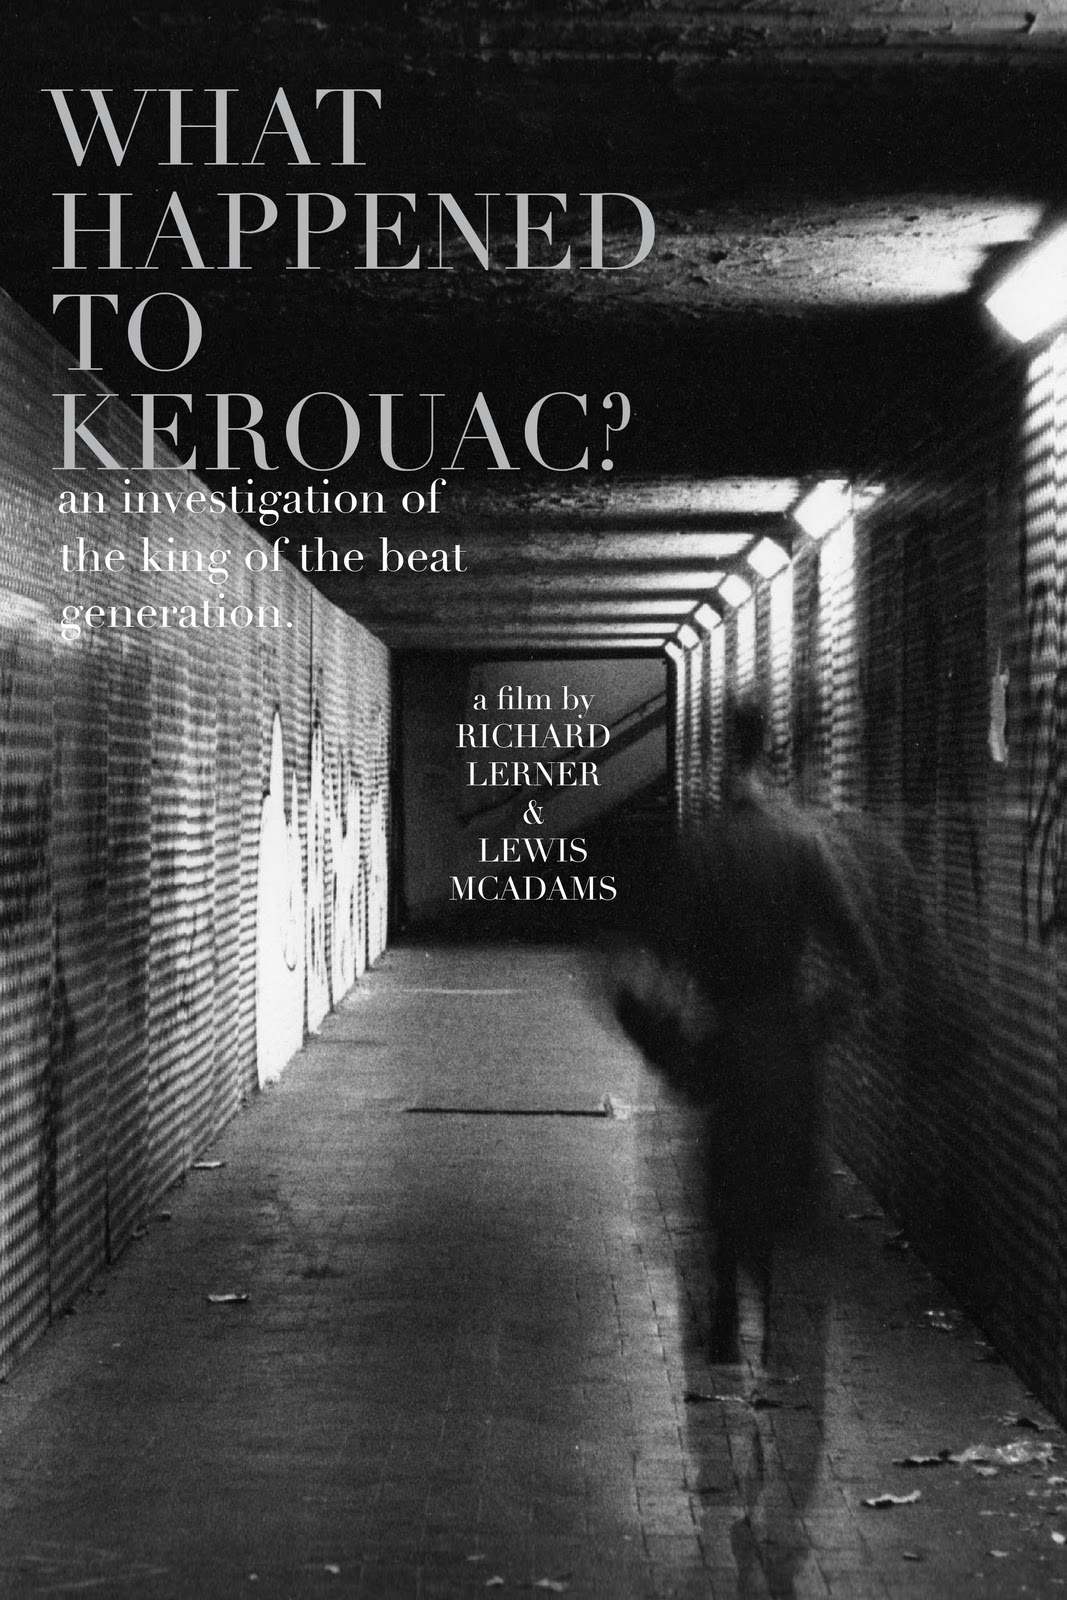 What Happened to Kerouac?